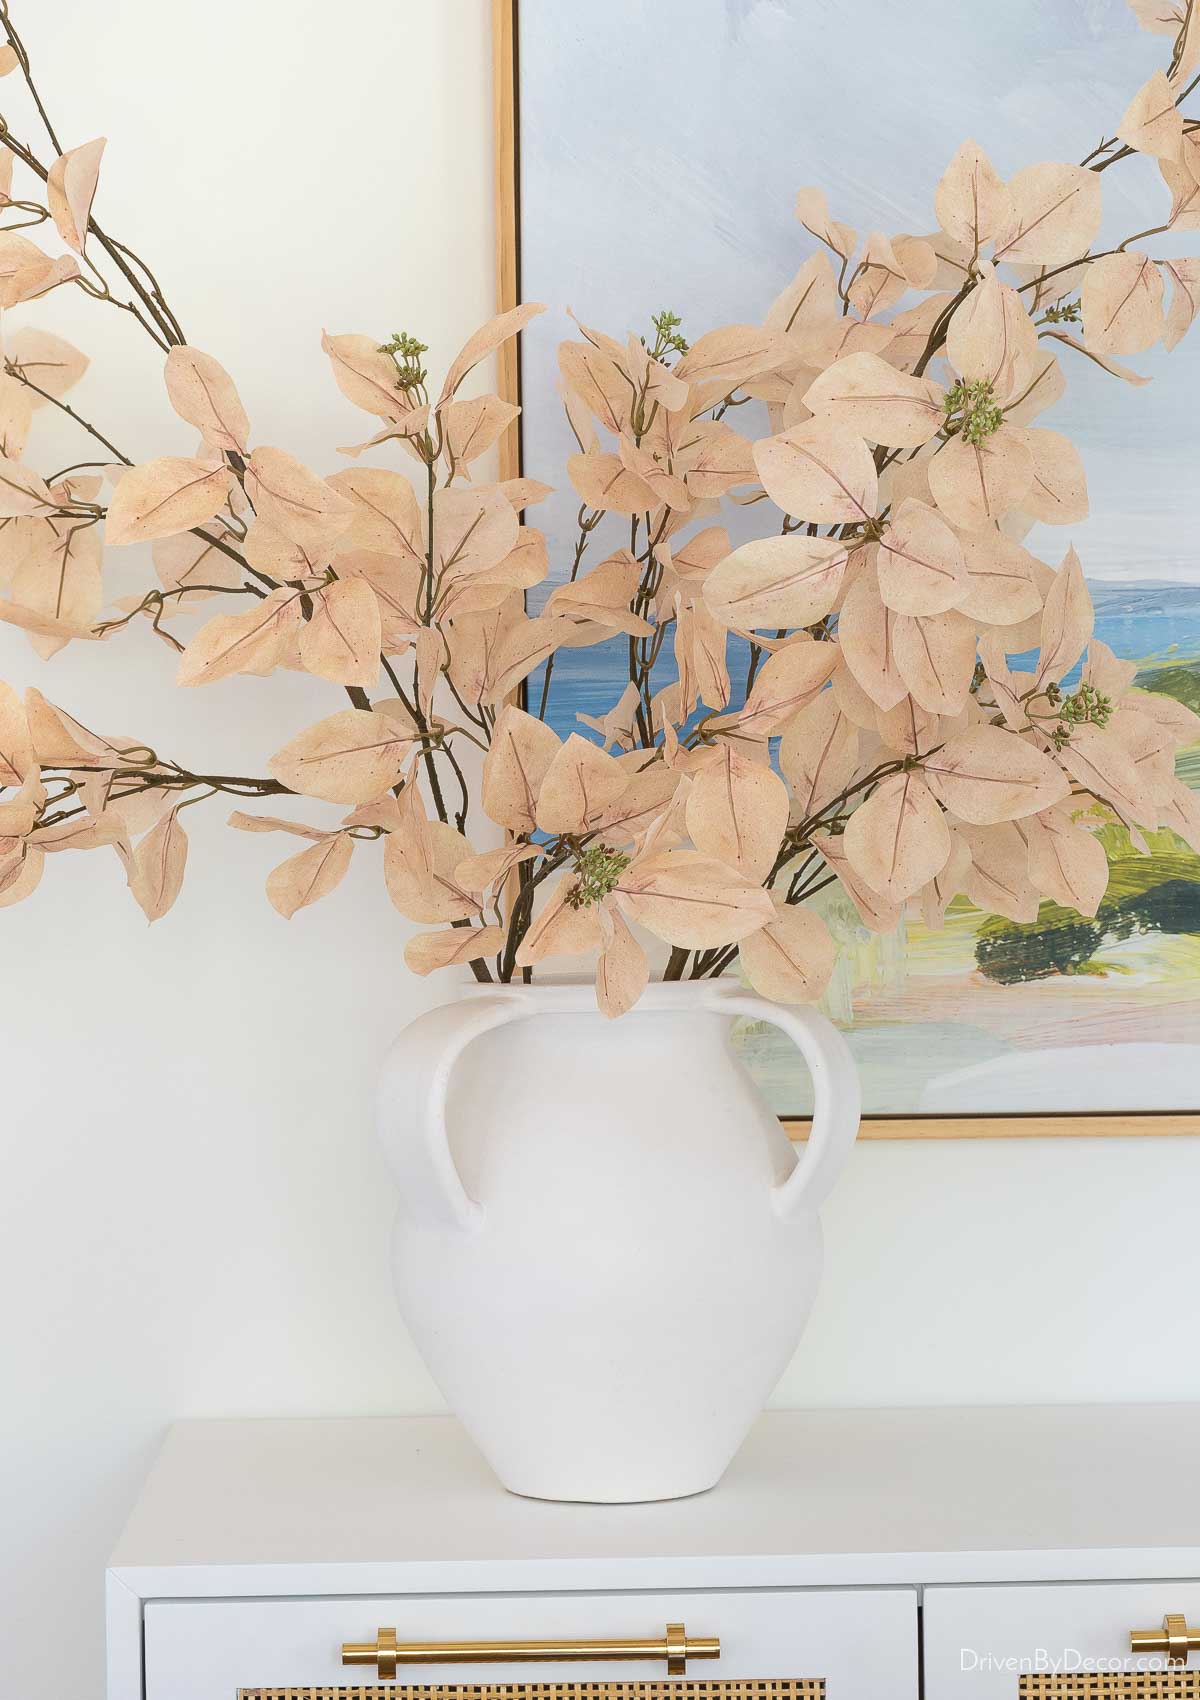 White ceramic vase with handles